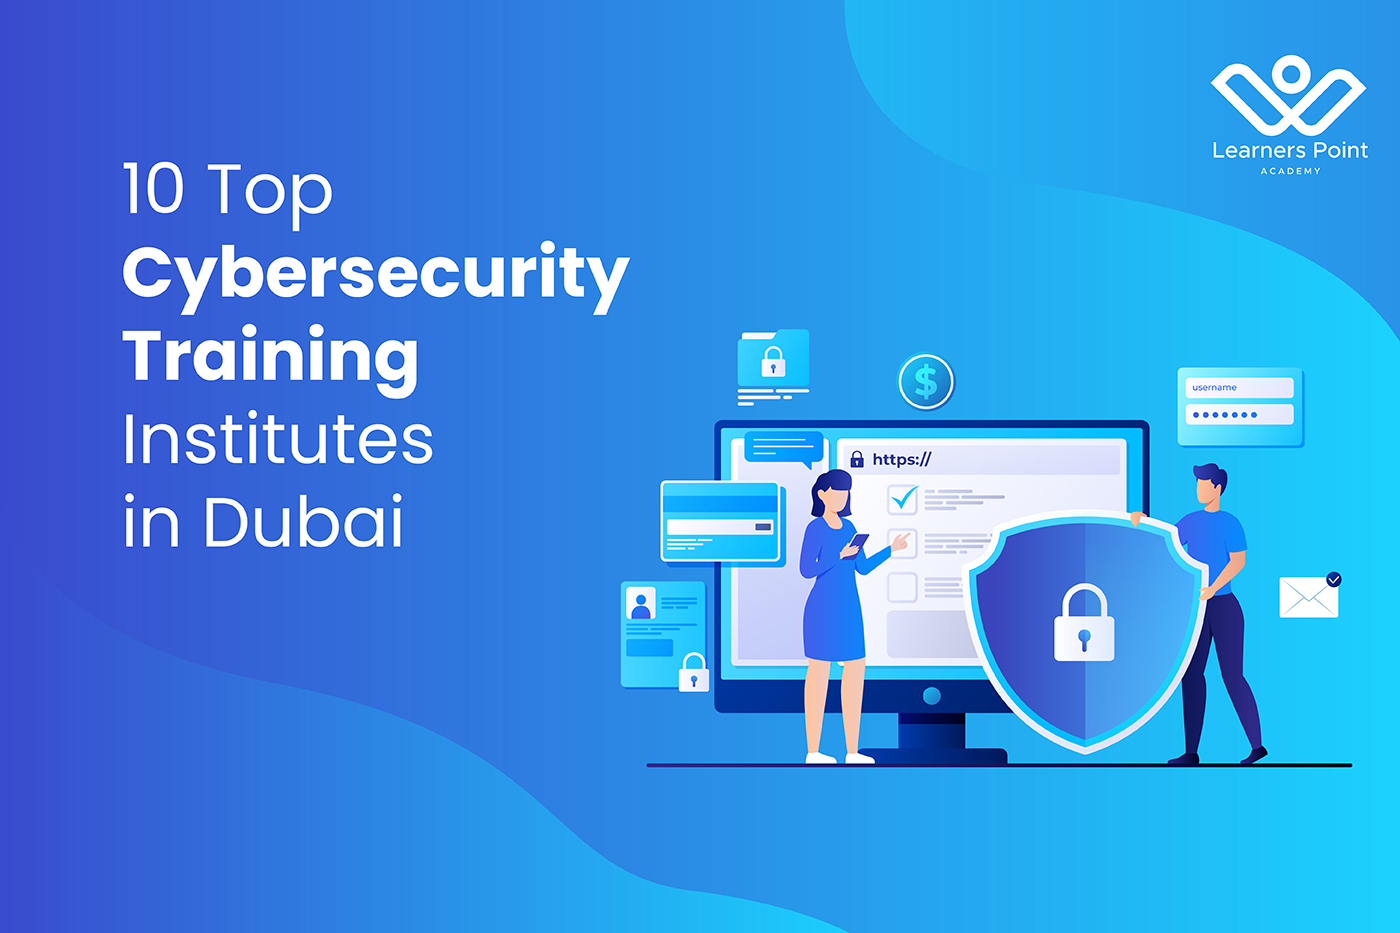 10 Top Cybersecurity Training Institutes in Dubai